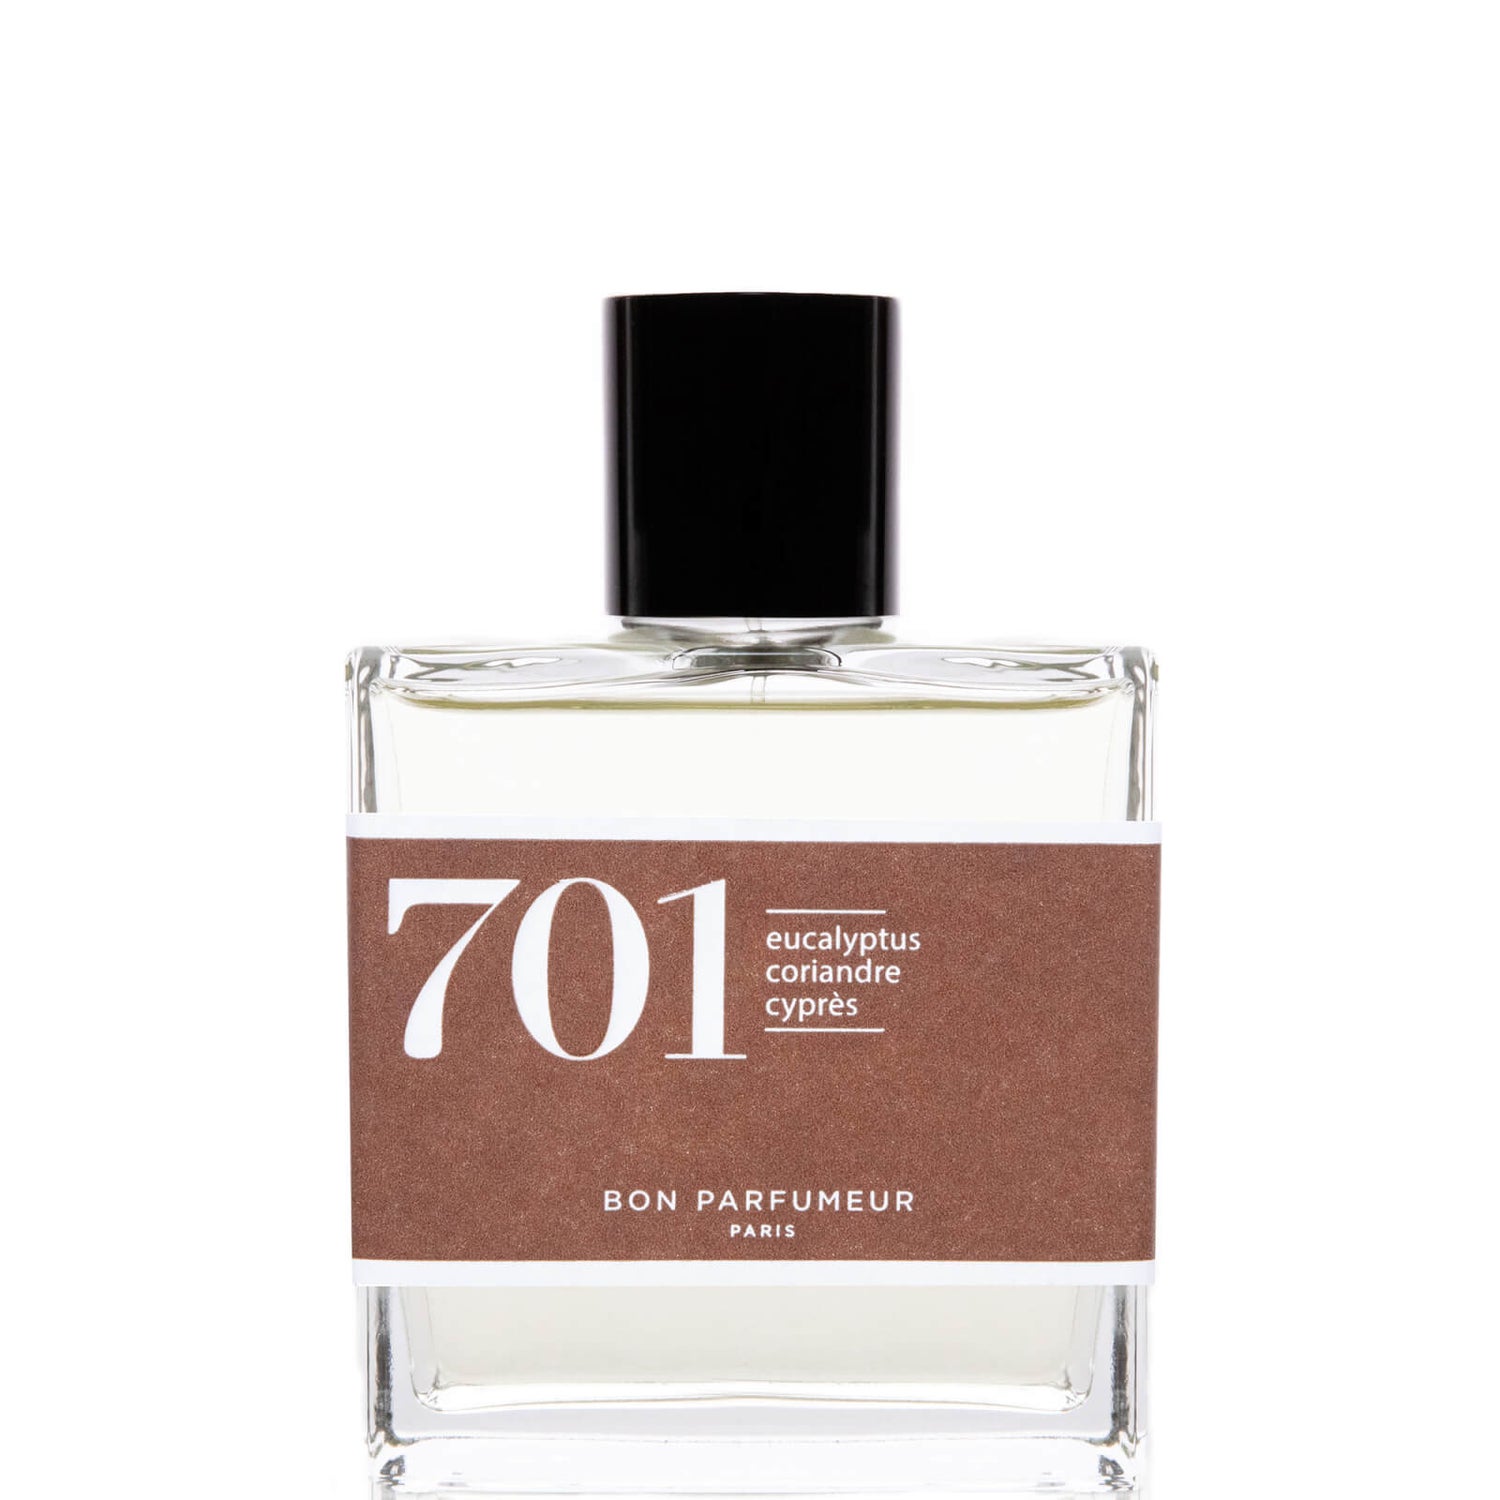 Bon Parfumeur 701 Eucaliptus Coriandru chiparos Apă de parfum - 100ml